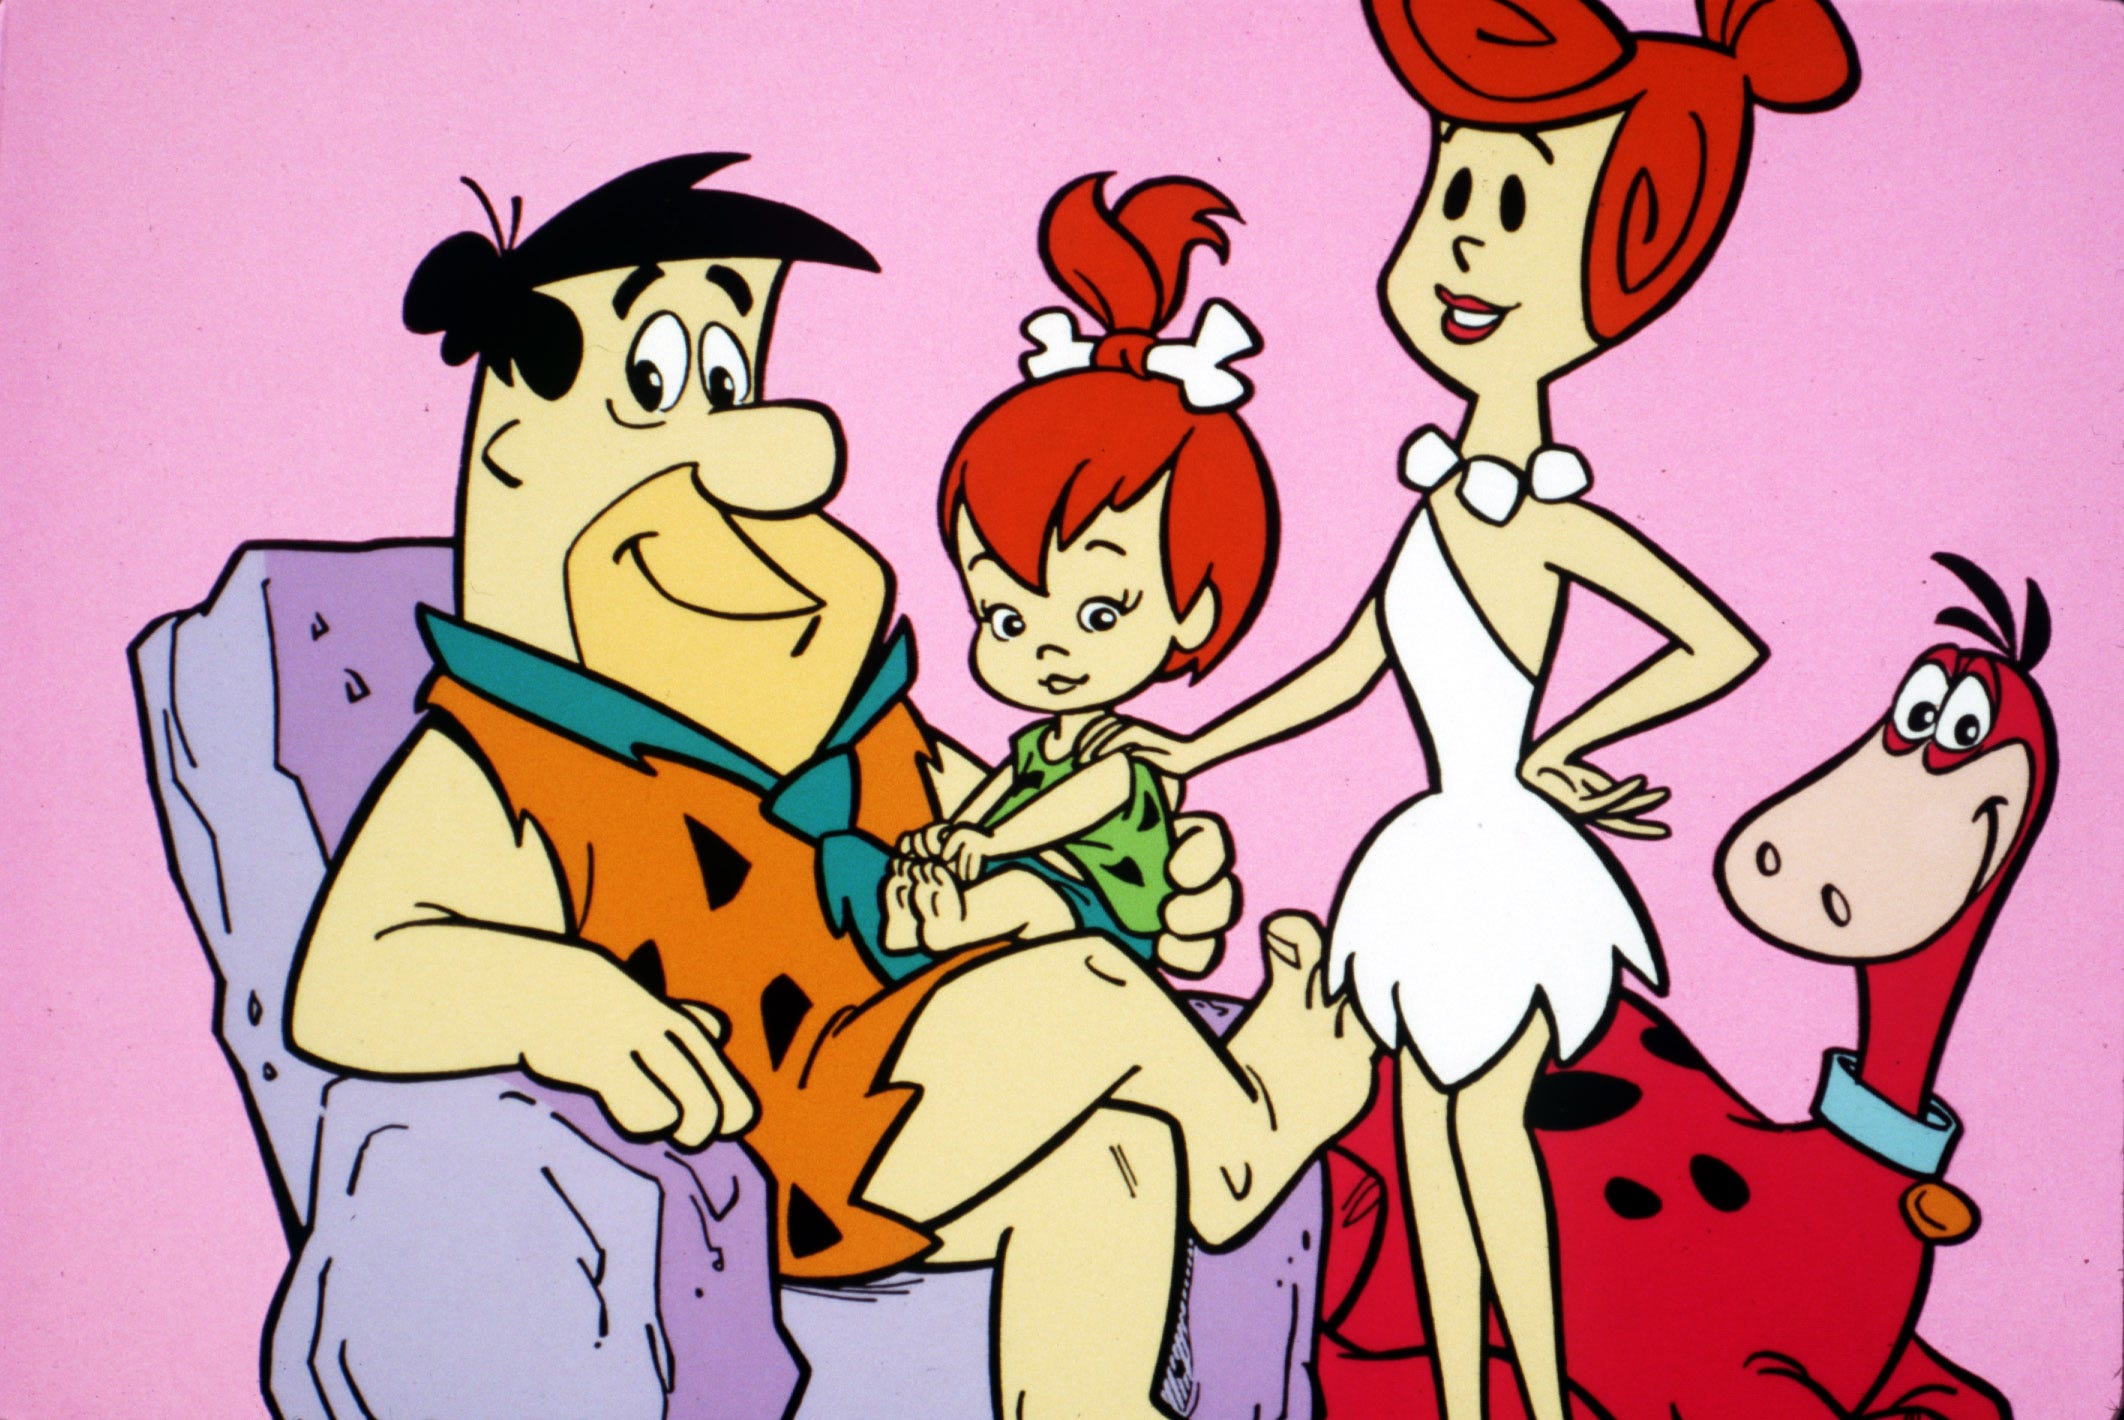 Flintstones Trailer Watch on HBO Max!